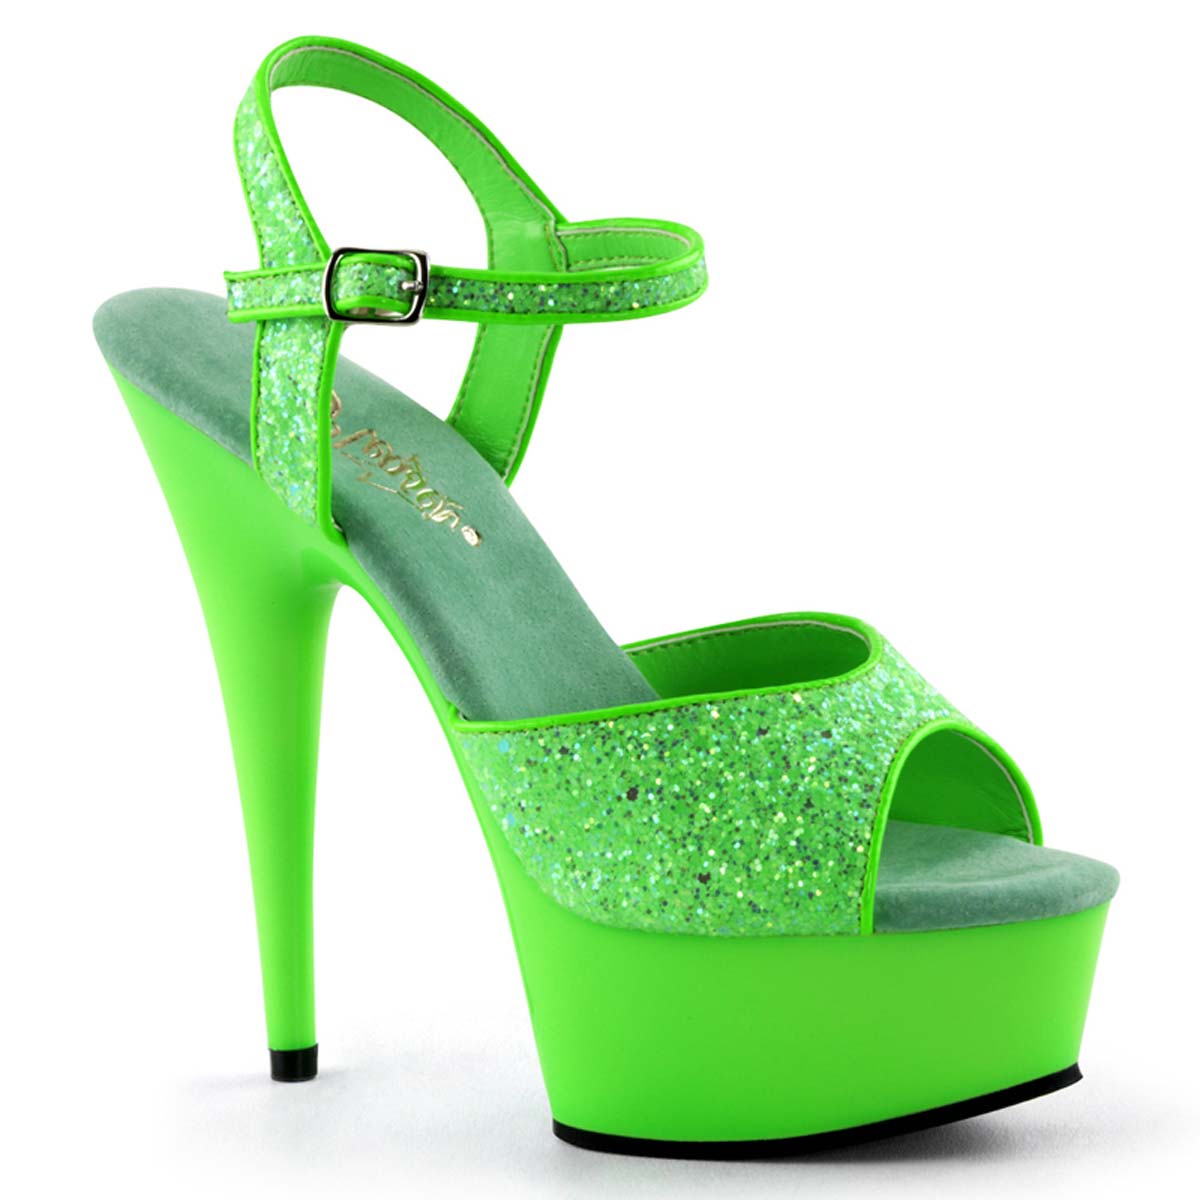 Pleaser Amuse-20 - Neon Green Patent in Sexy Heels & Platforms - $59.95